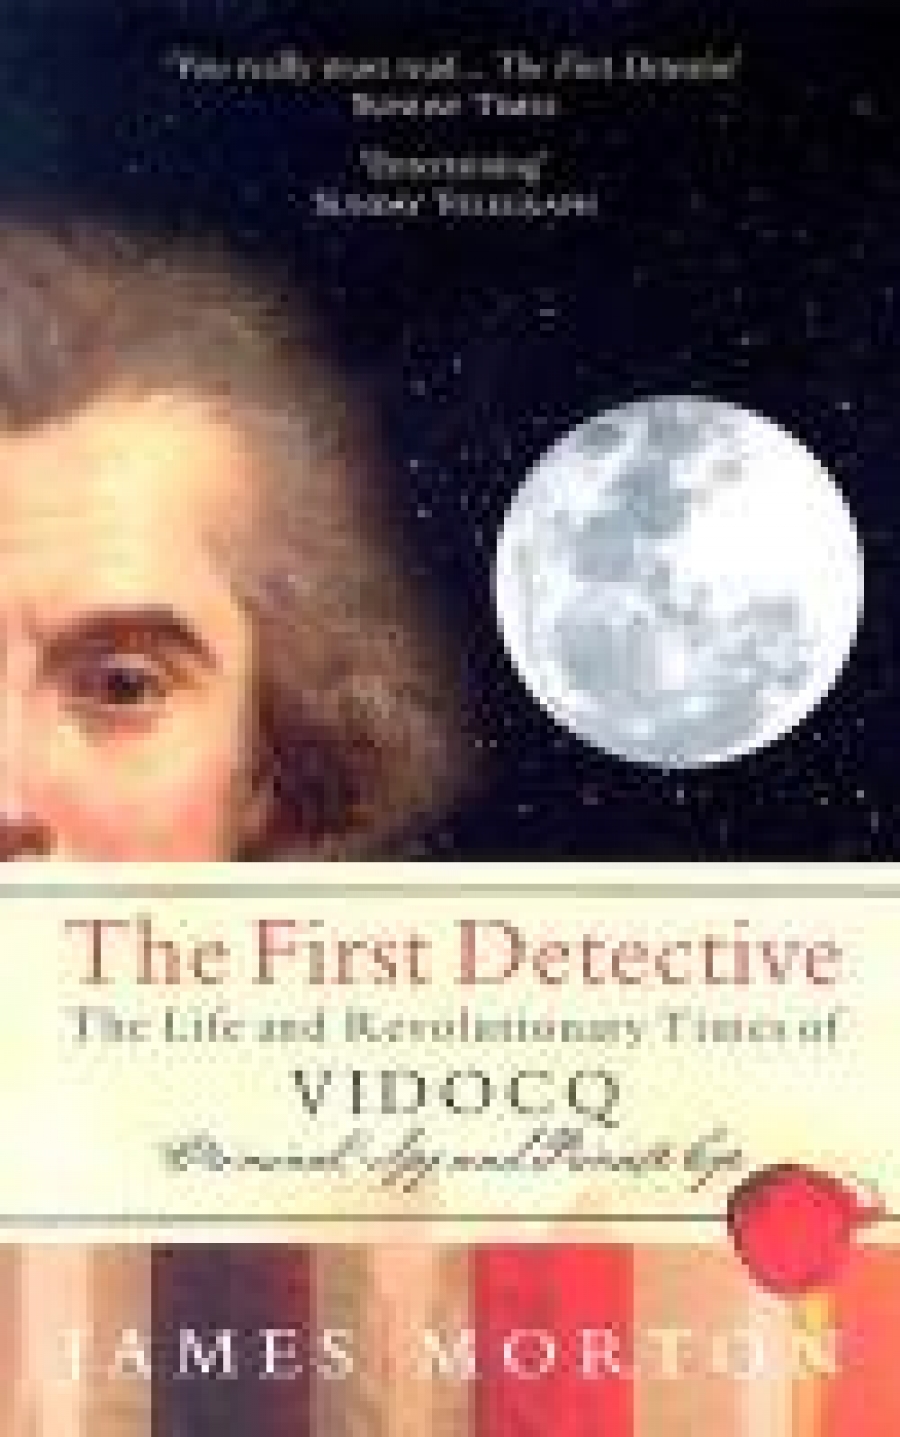 James, Morton First Detective: Life & Revolutionary Times of Vidocq 